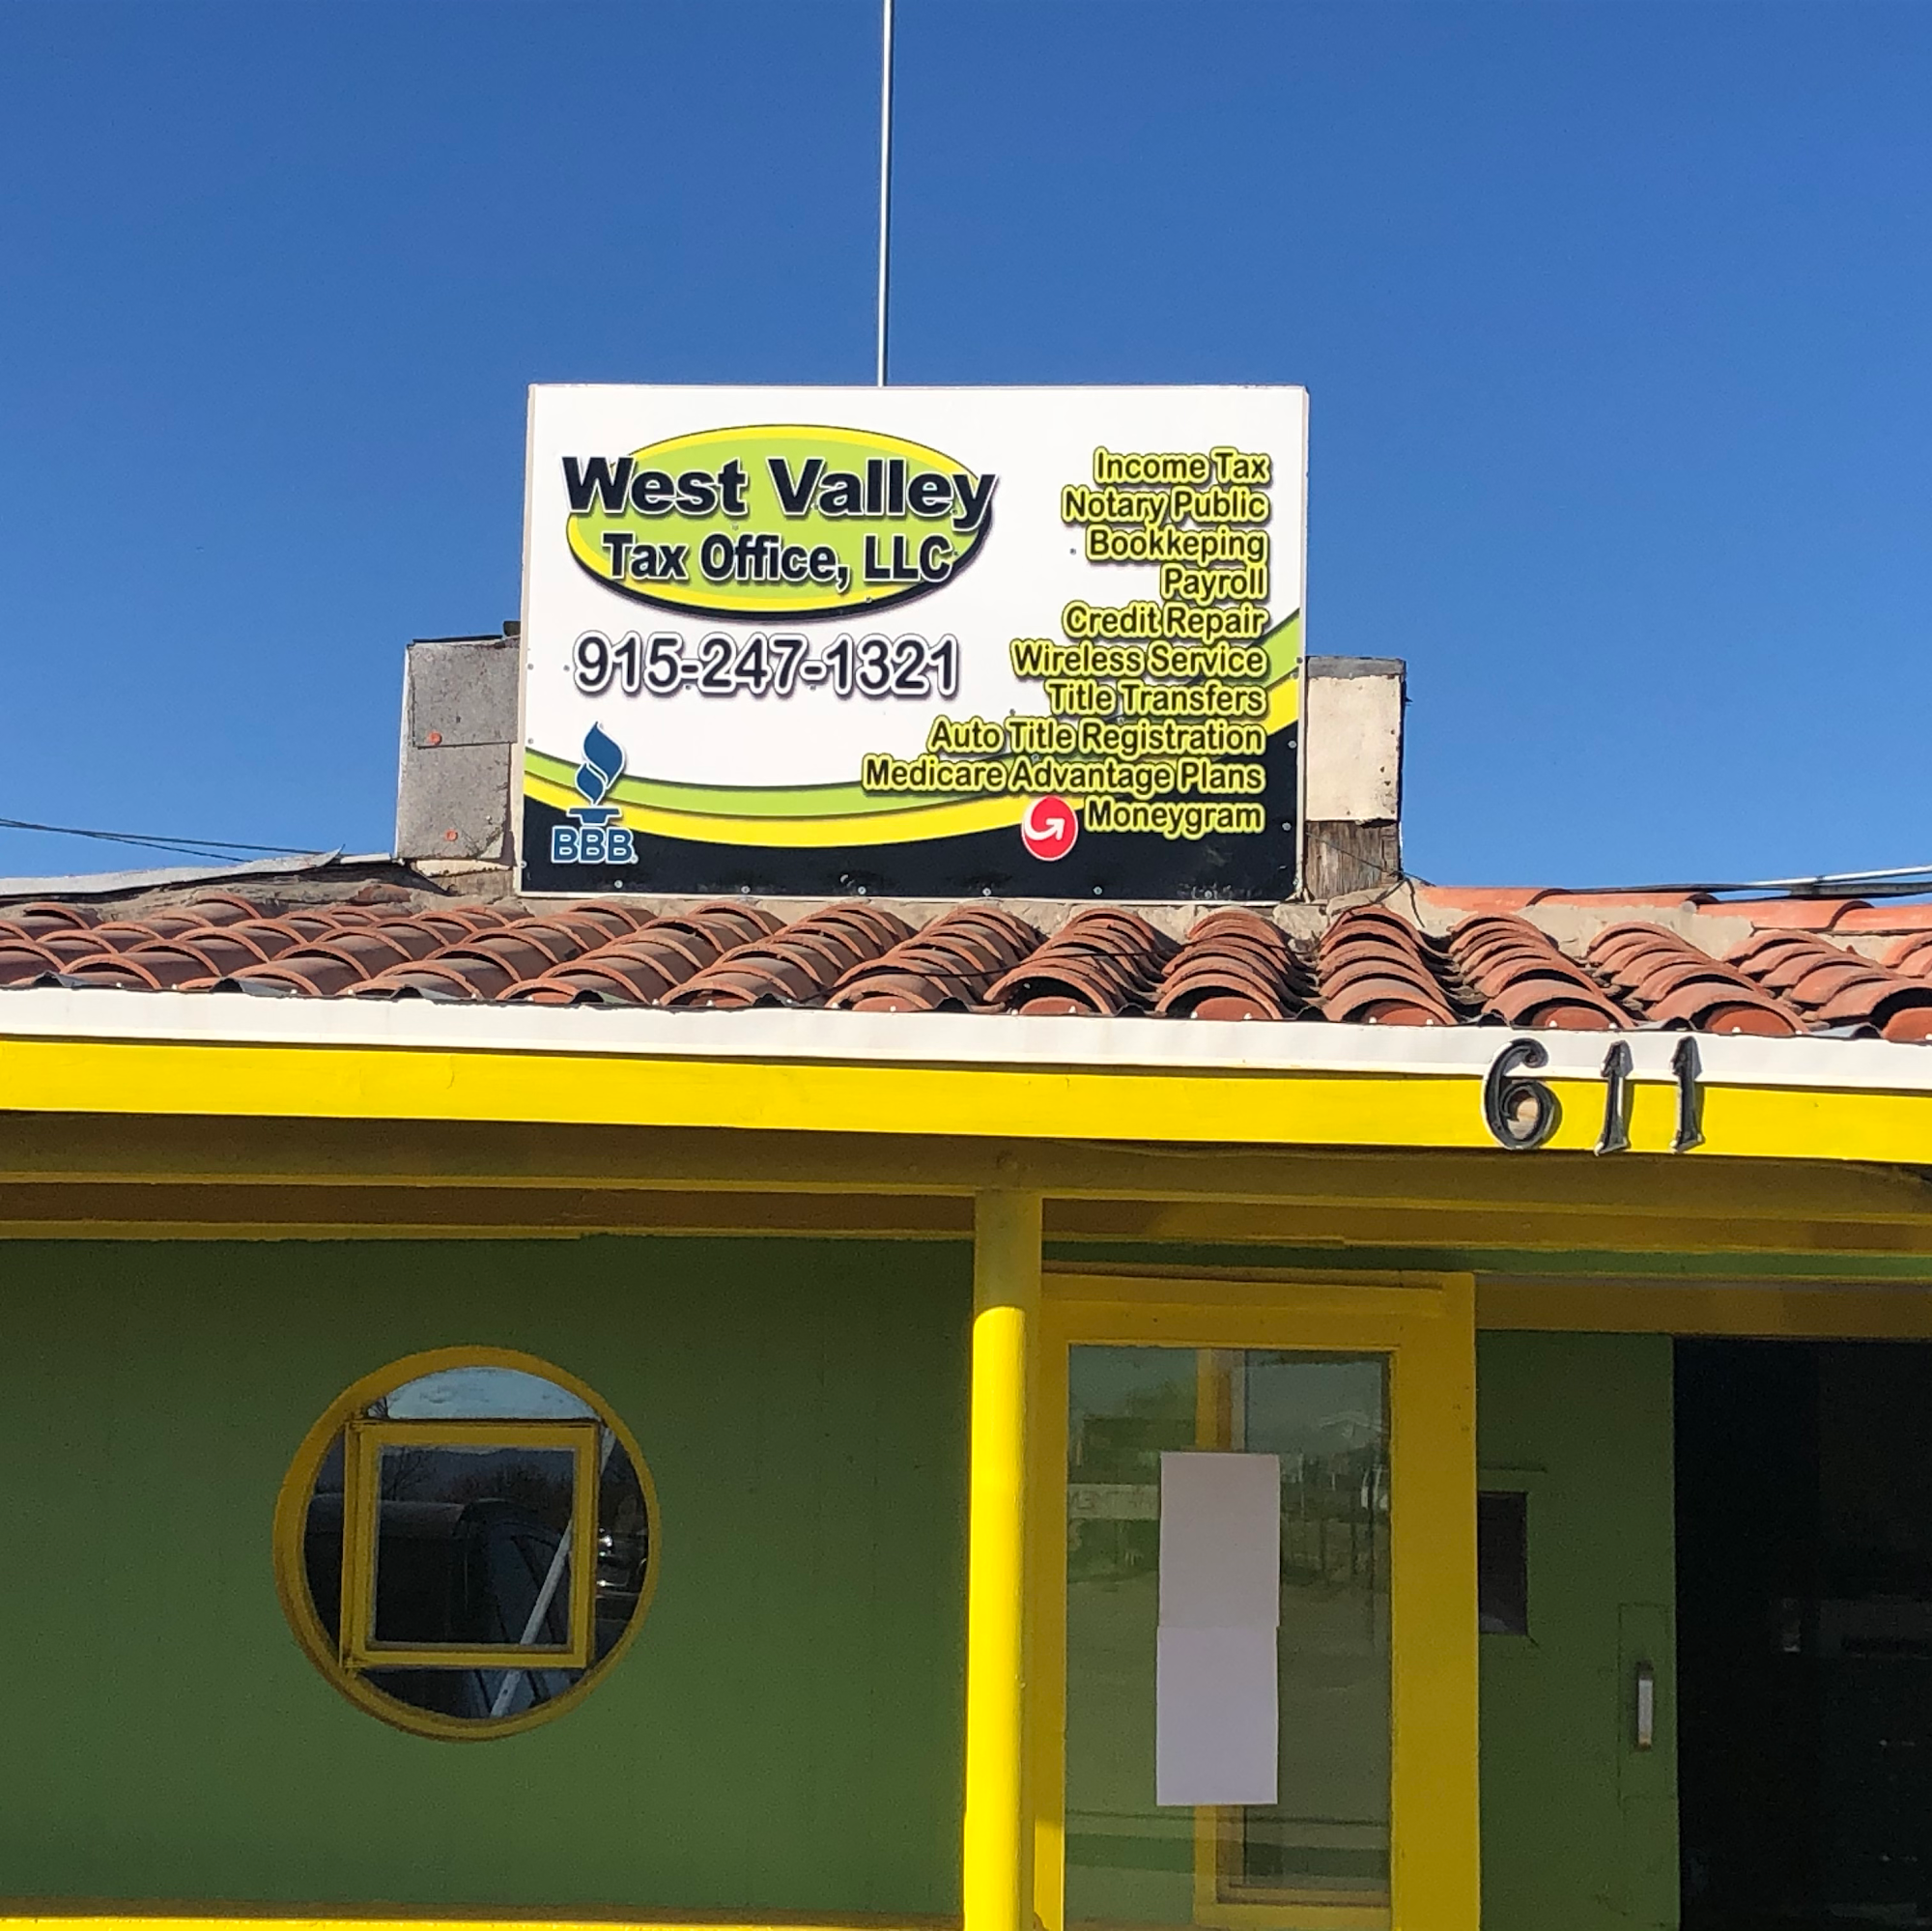 West Valley Tax Office, LLC